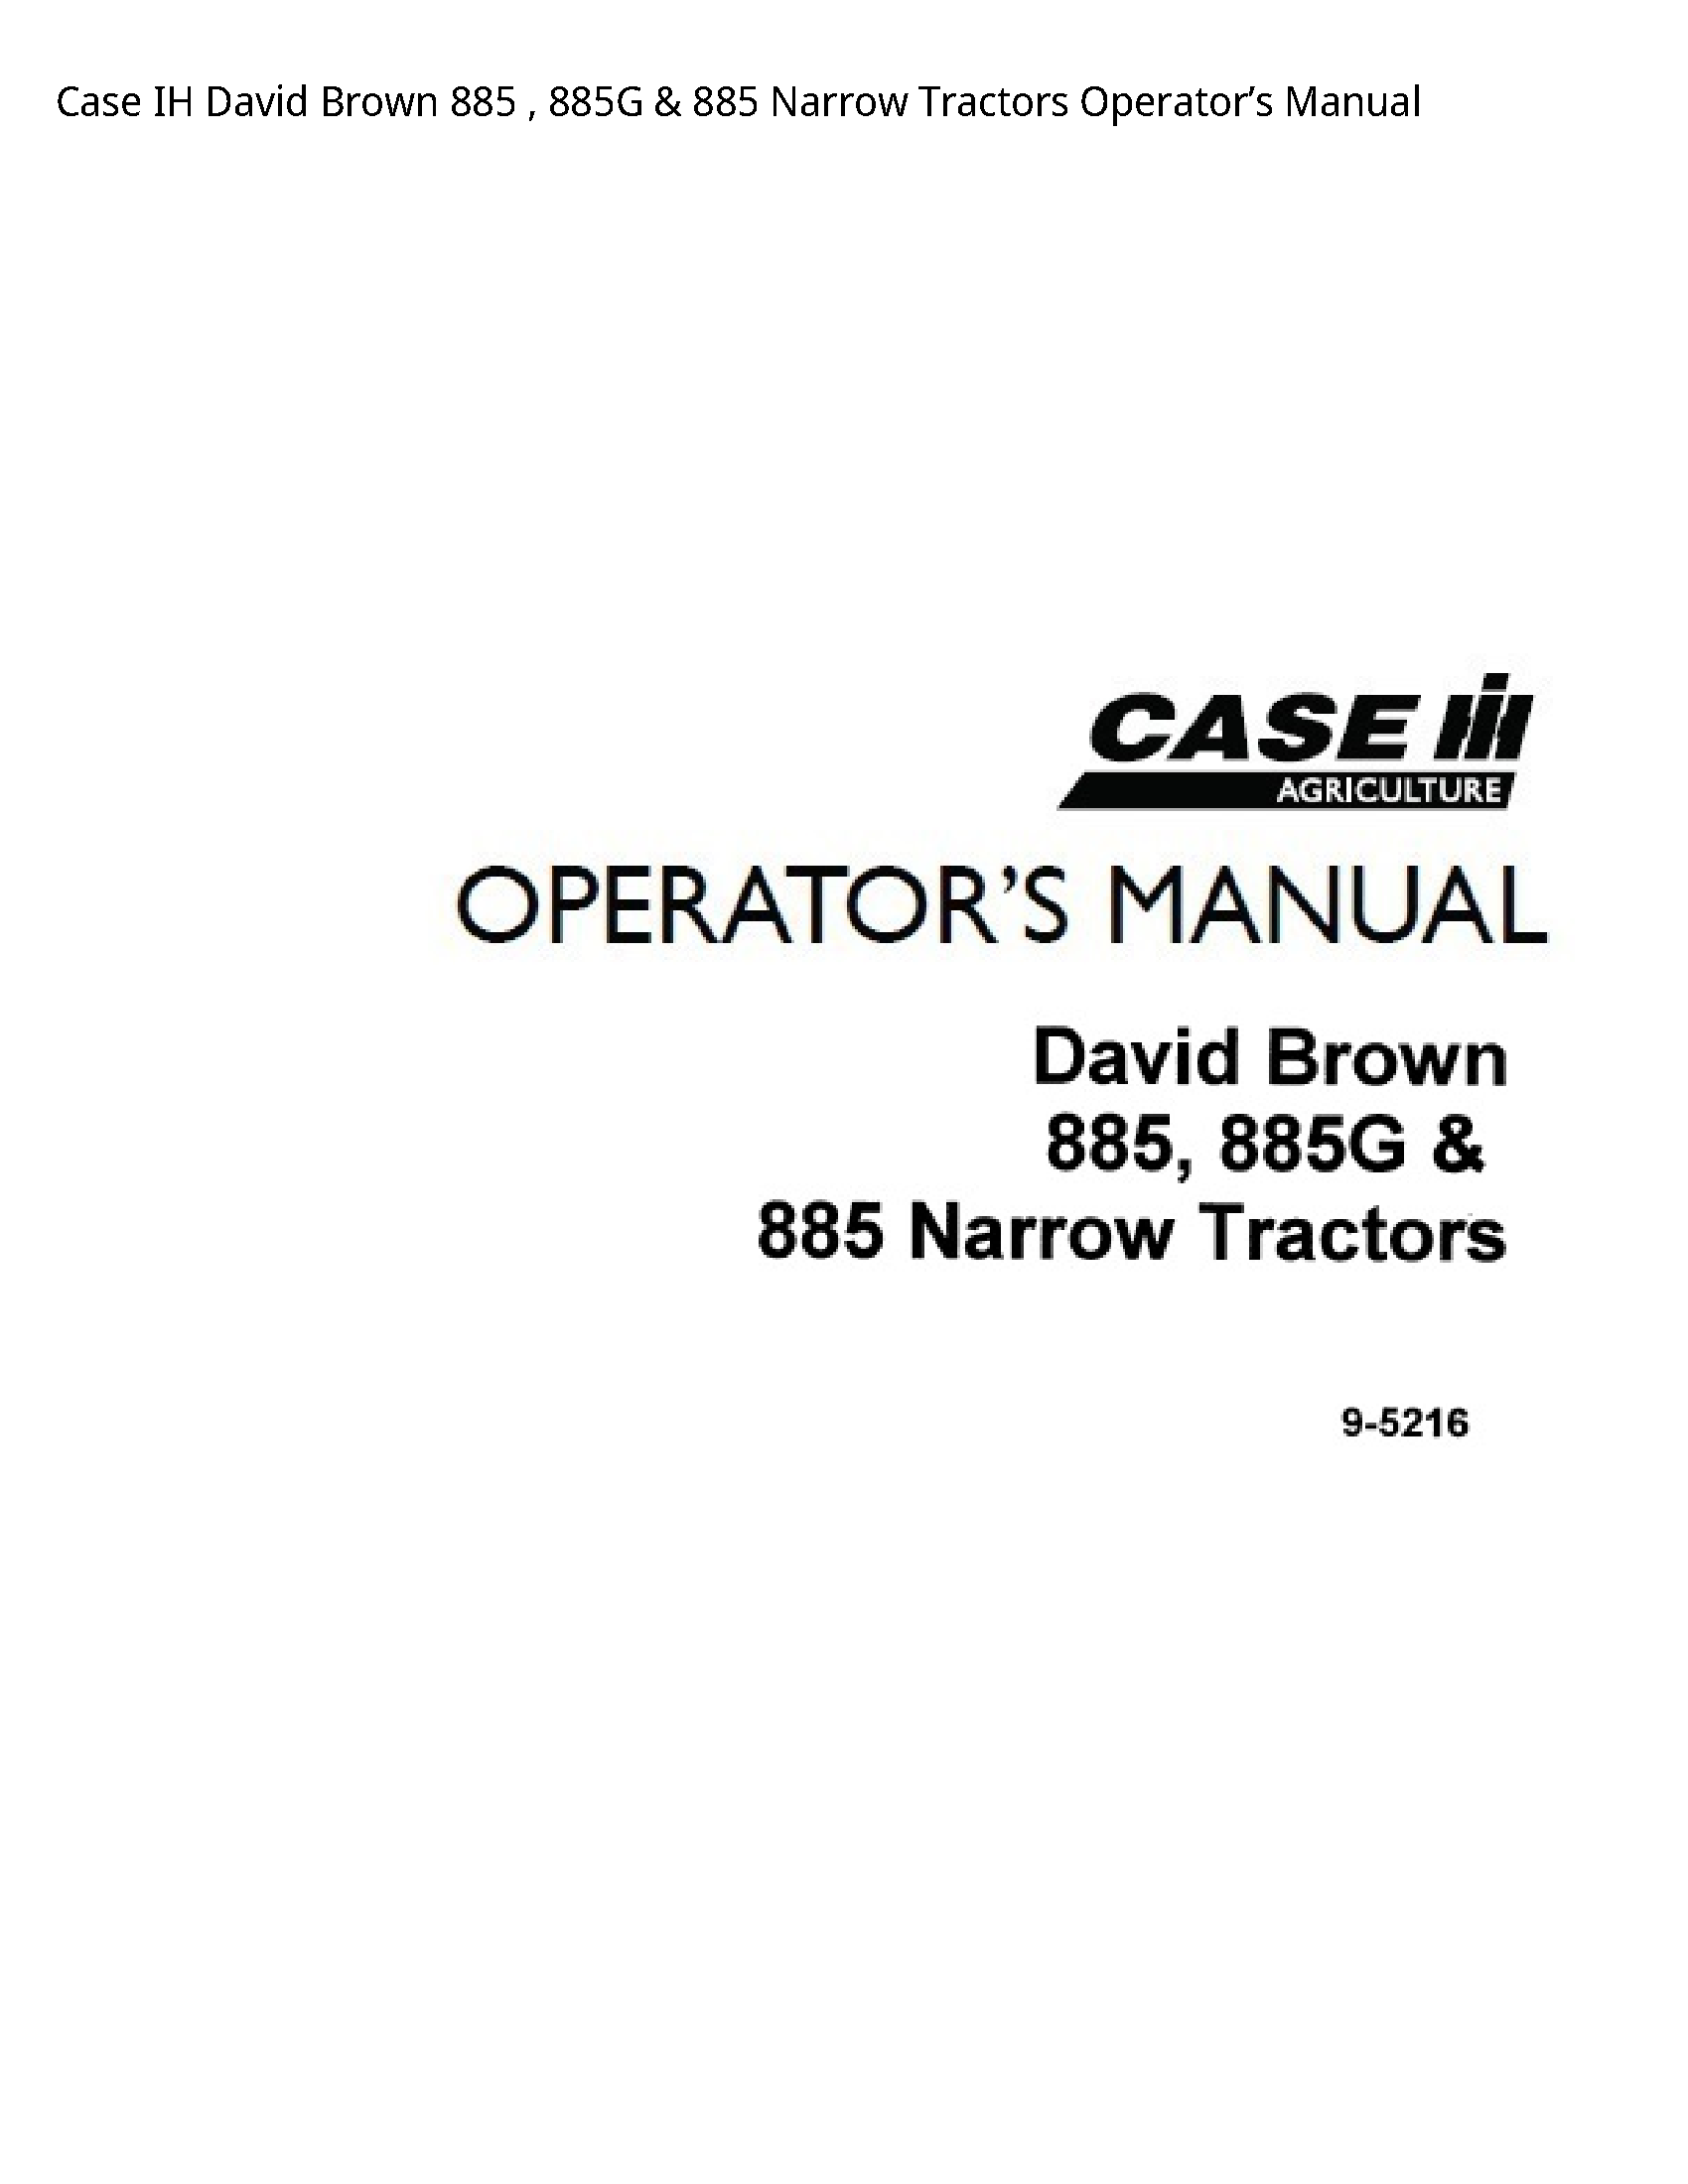 Case/Case IH 885 IH David Brown Narrow Tractors Operator’s manual